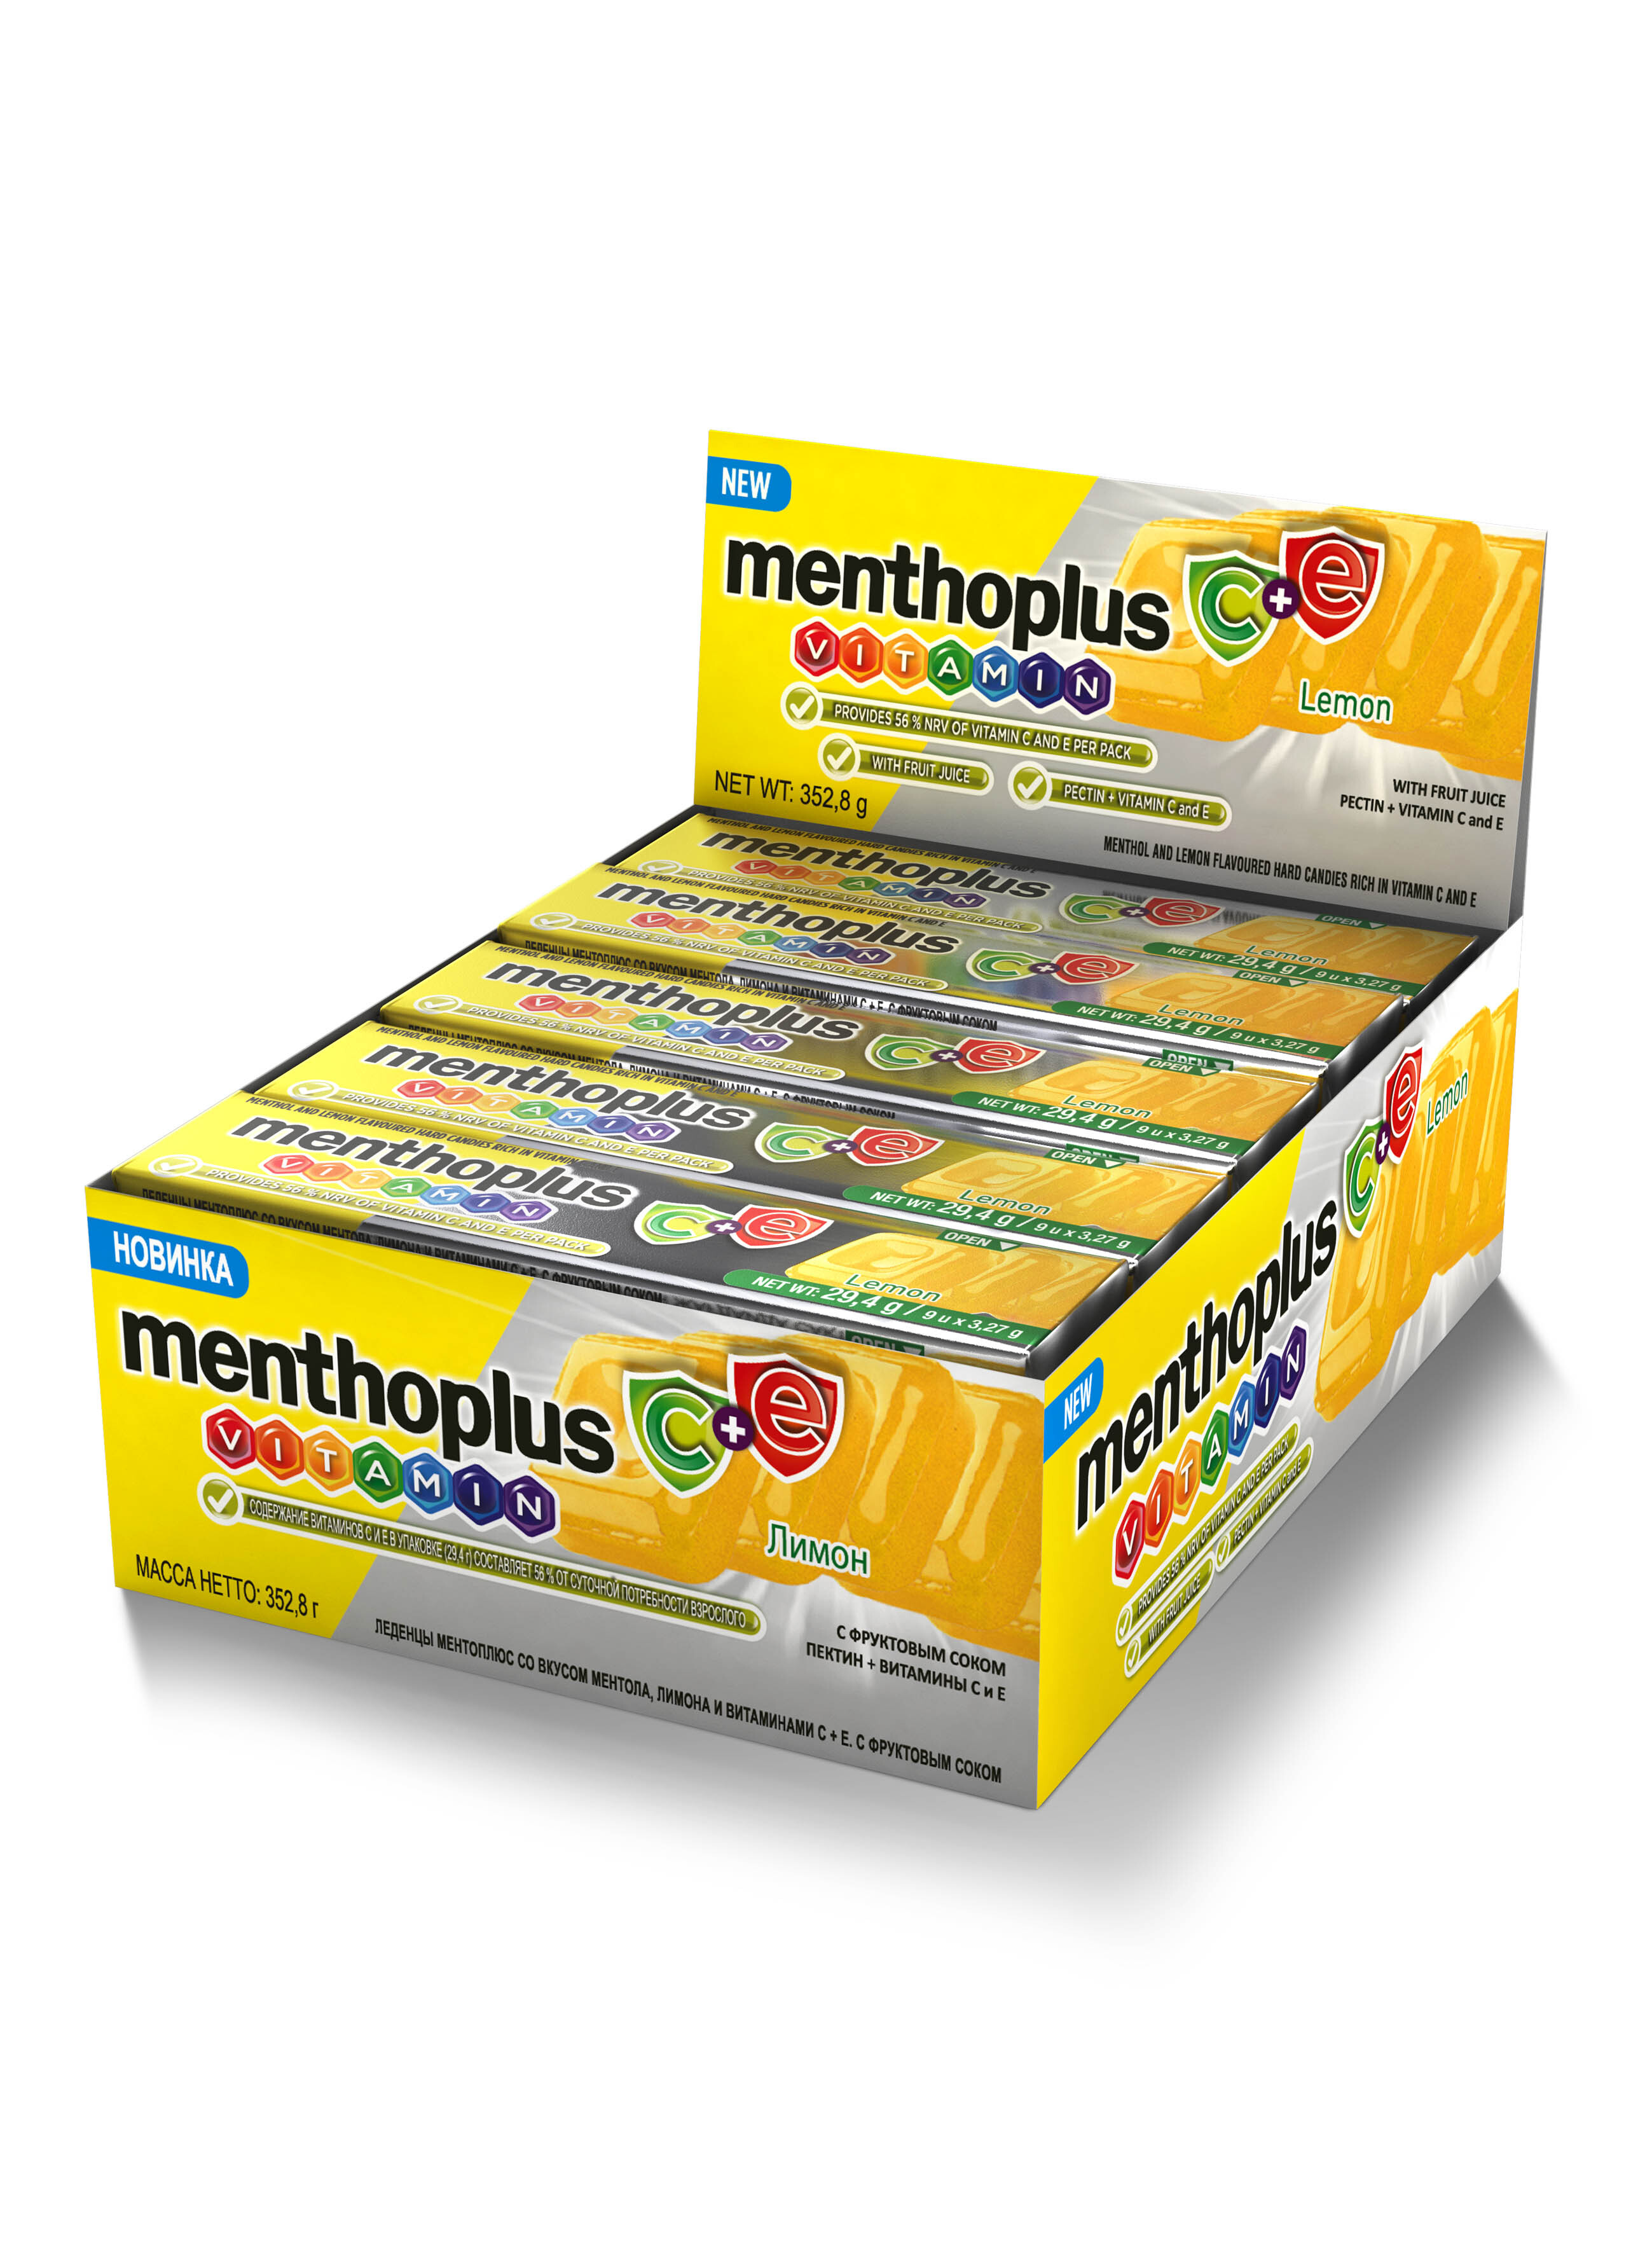 Леденцы Menthoplus Vitamin C+E с лимонным вкусом 29,4 г.